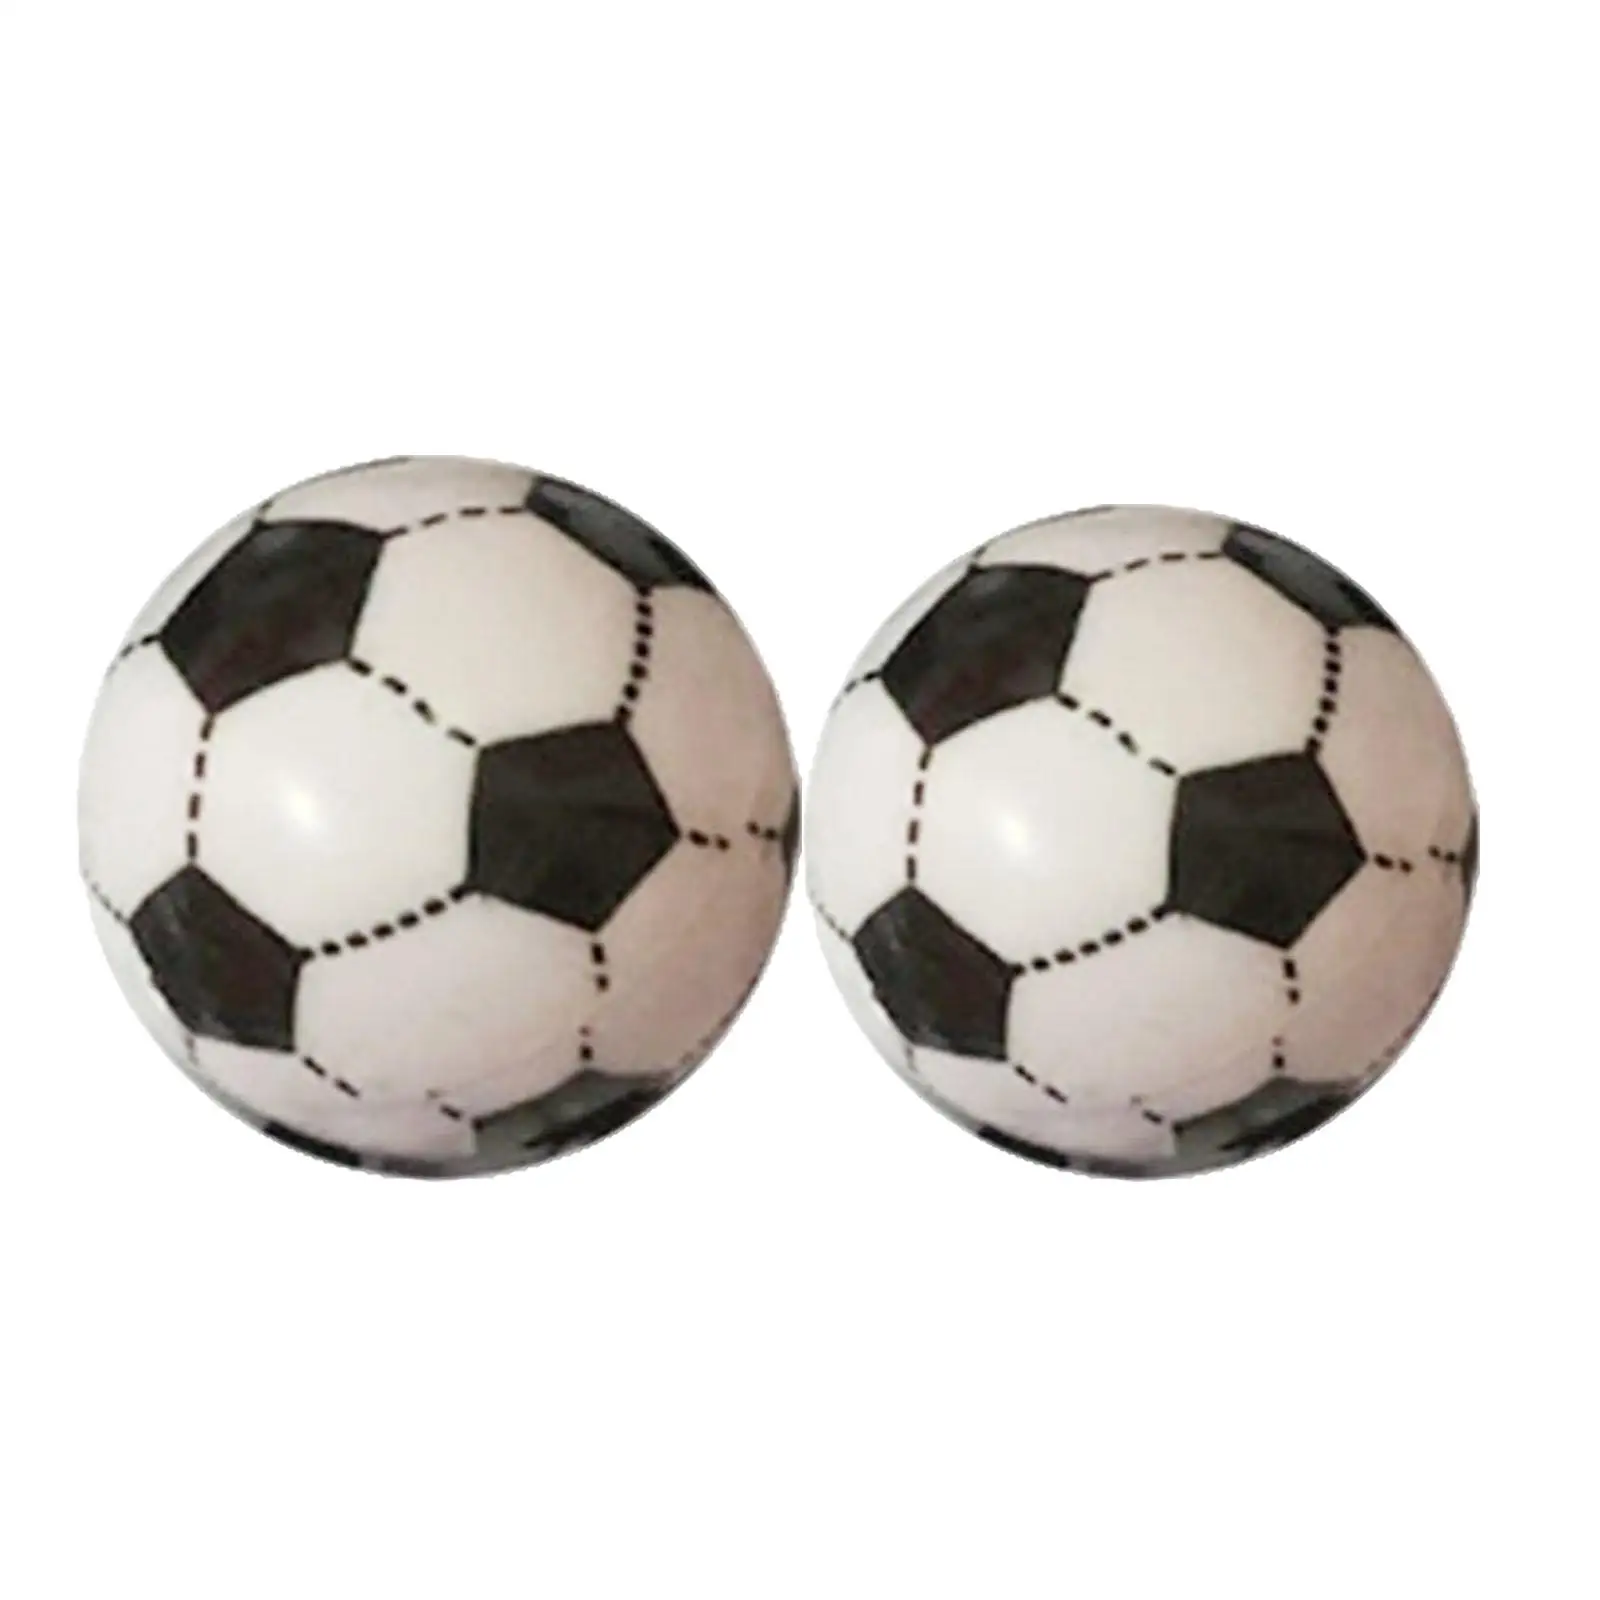 Miniature Table Soccer Ball Durability Tabletop Ball for Standard Foosball Tables